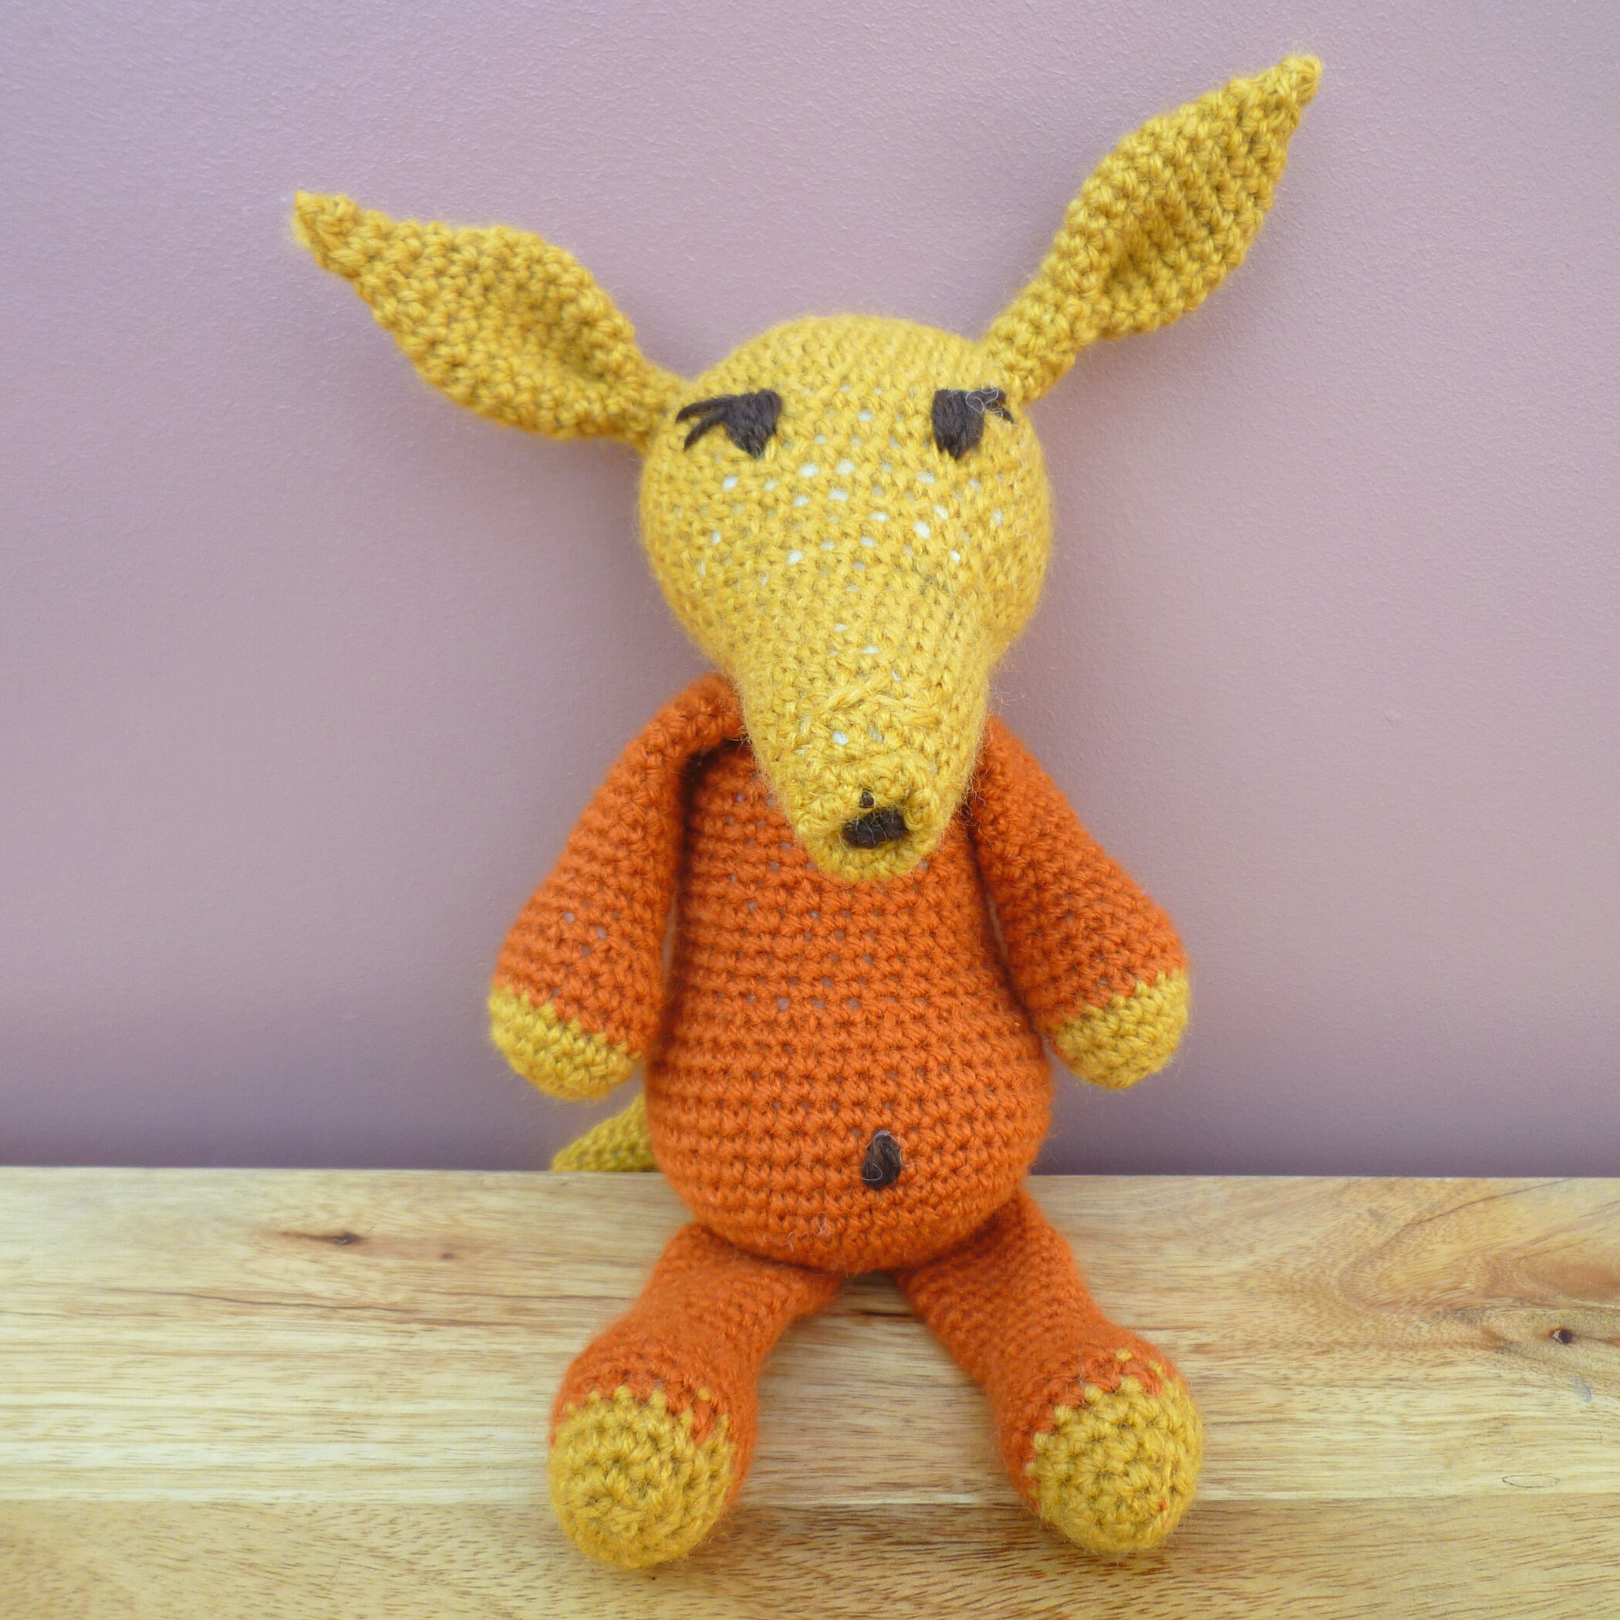 Handmade Crochet: Anvil the Aardvark